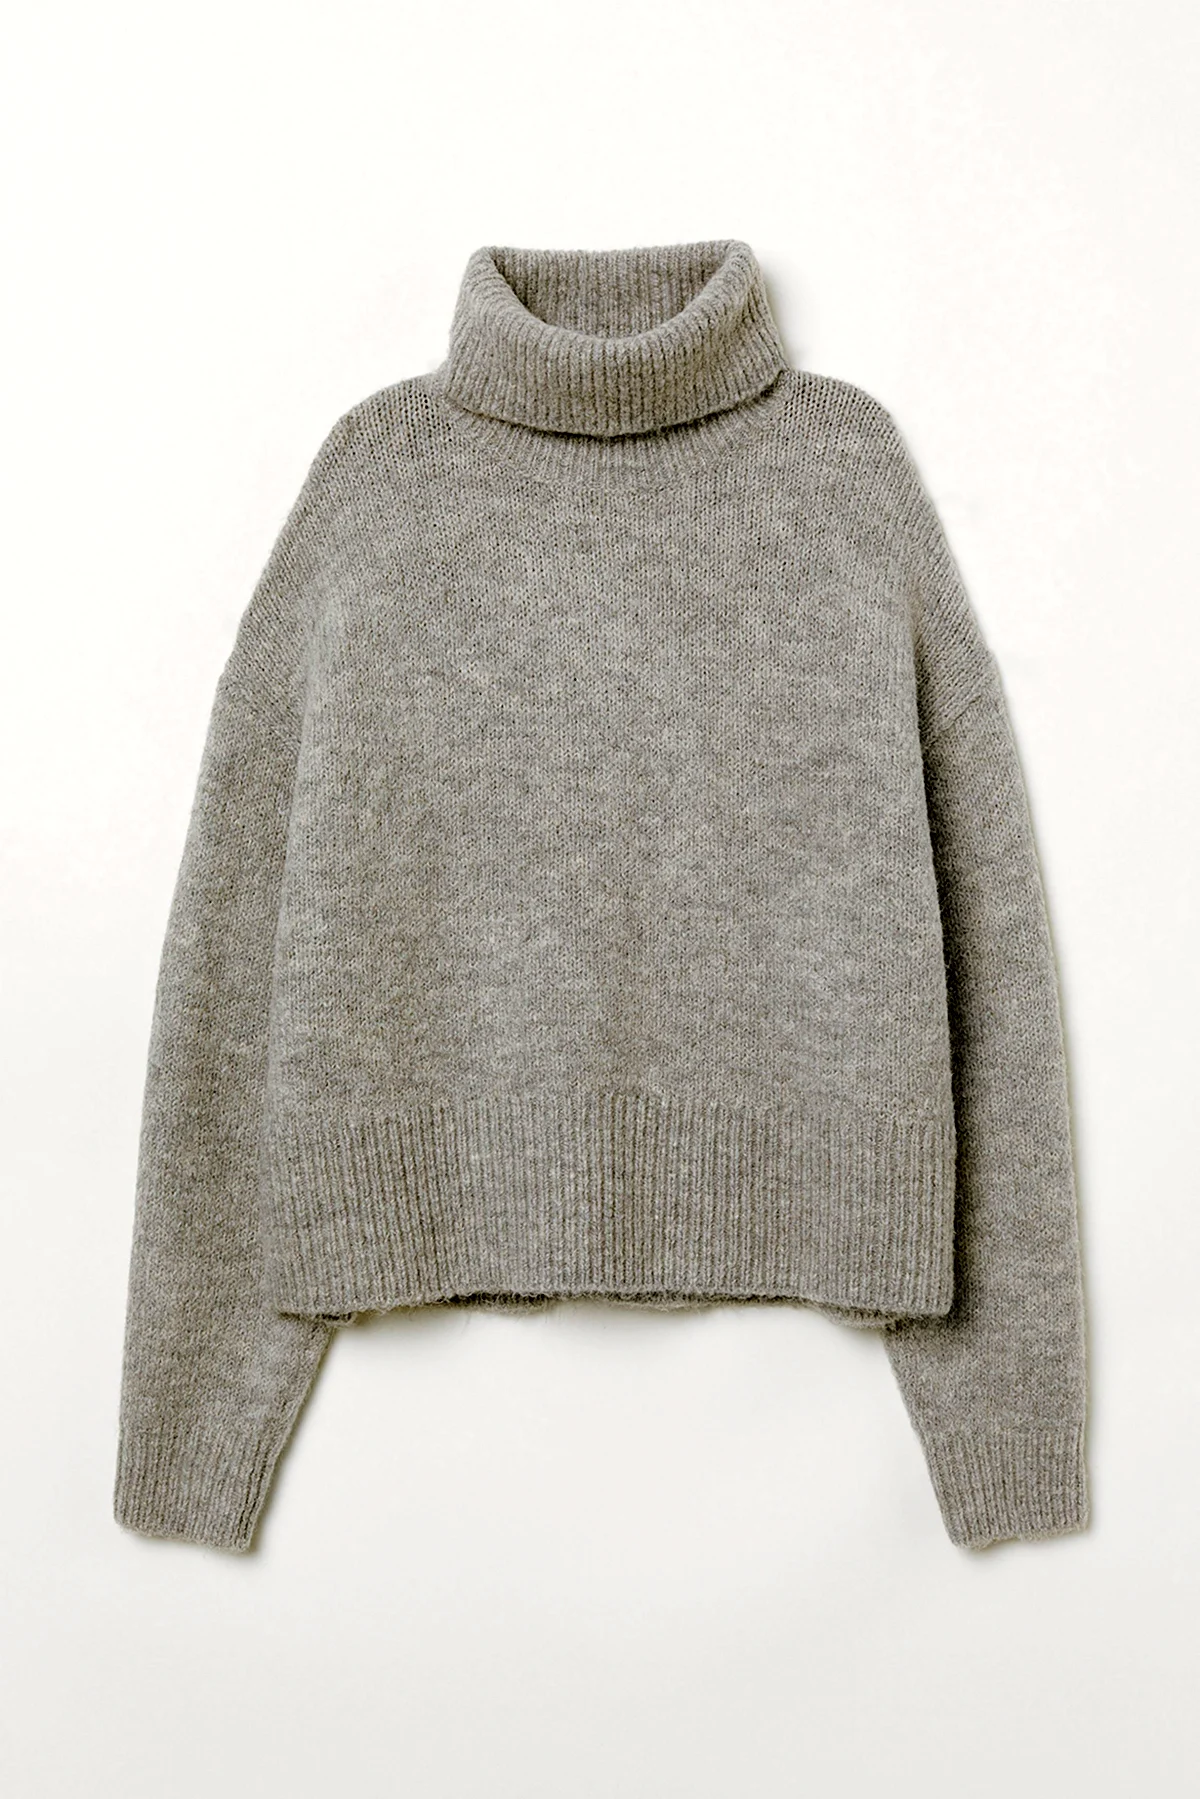 Grey Turtleneck Sweater h&m